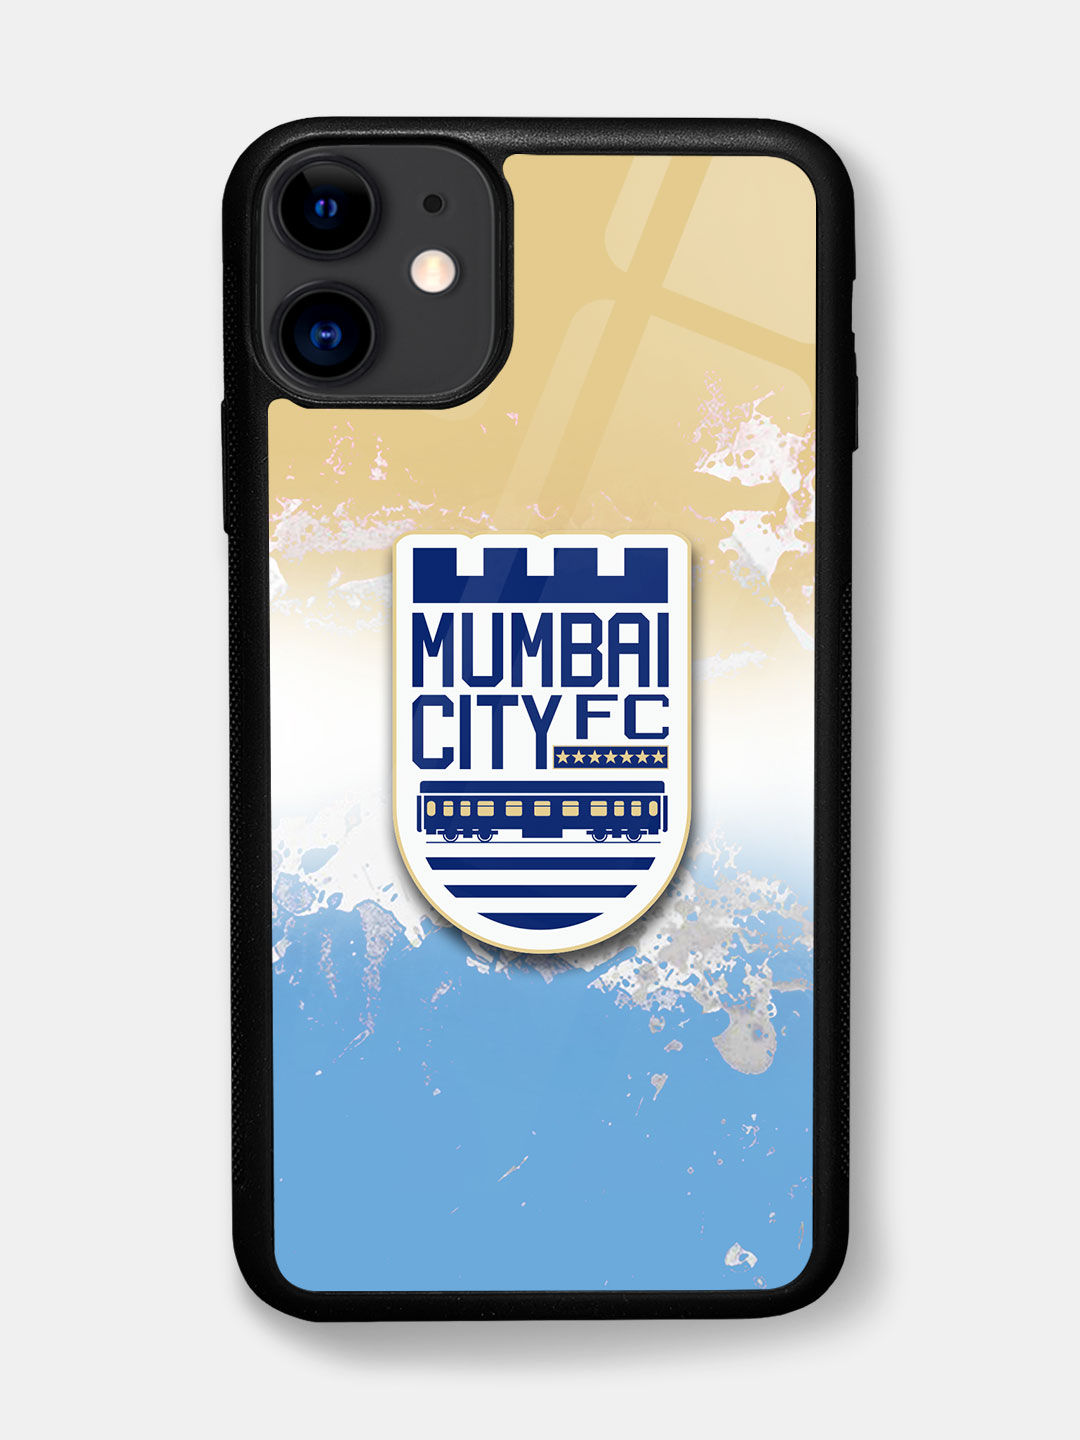 Mumbai City FC VIDEO: A lookback at the logo unveiling event!